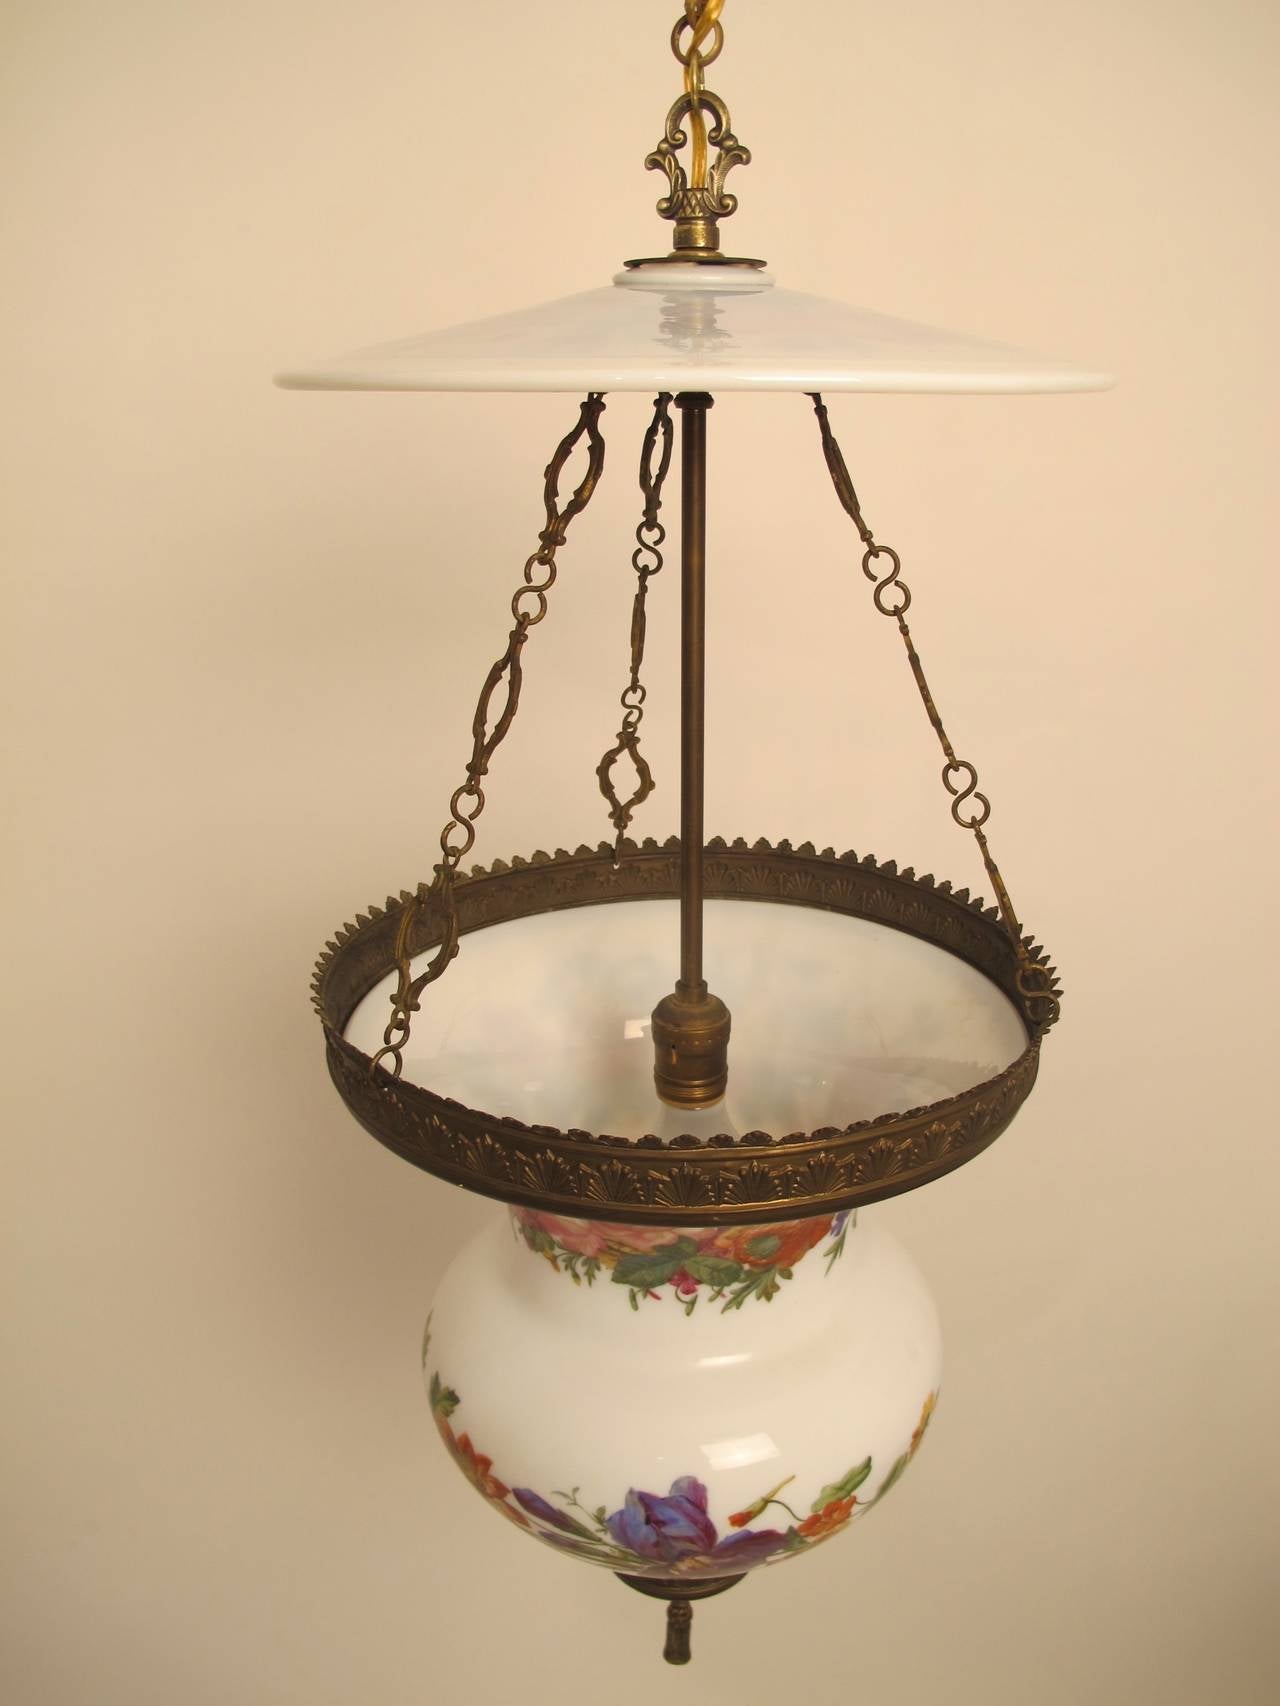 Painted 19th Century Hurricane Lamp Light Fixture